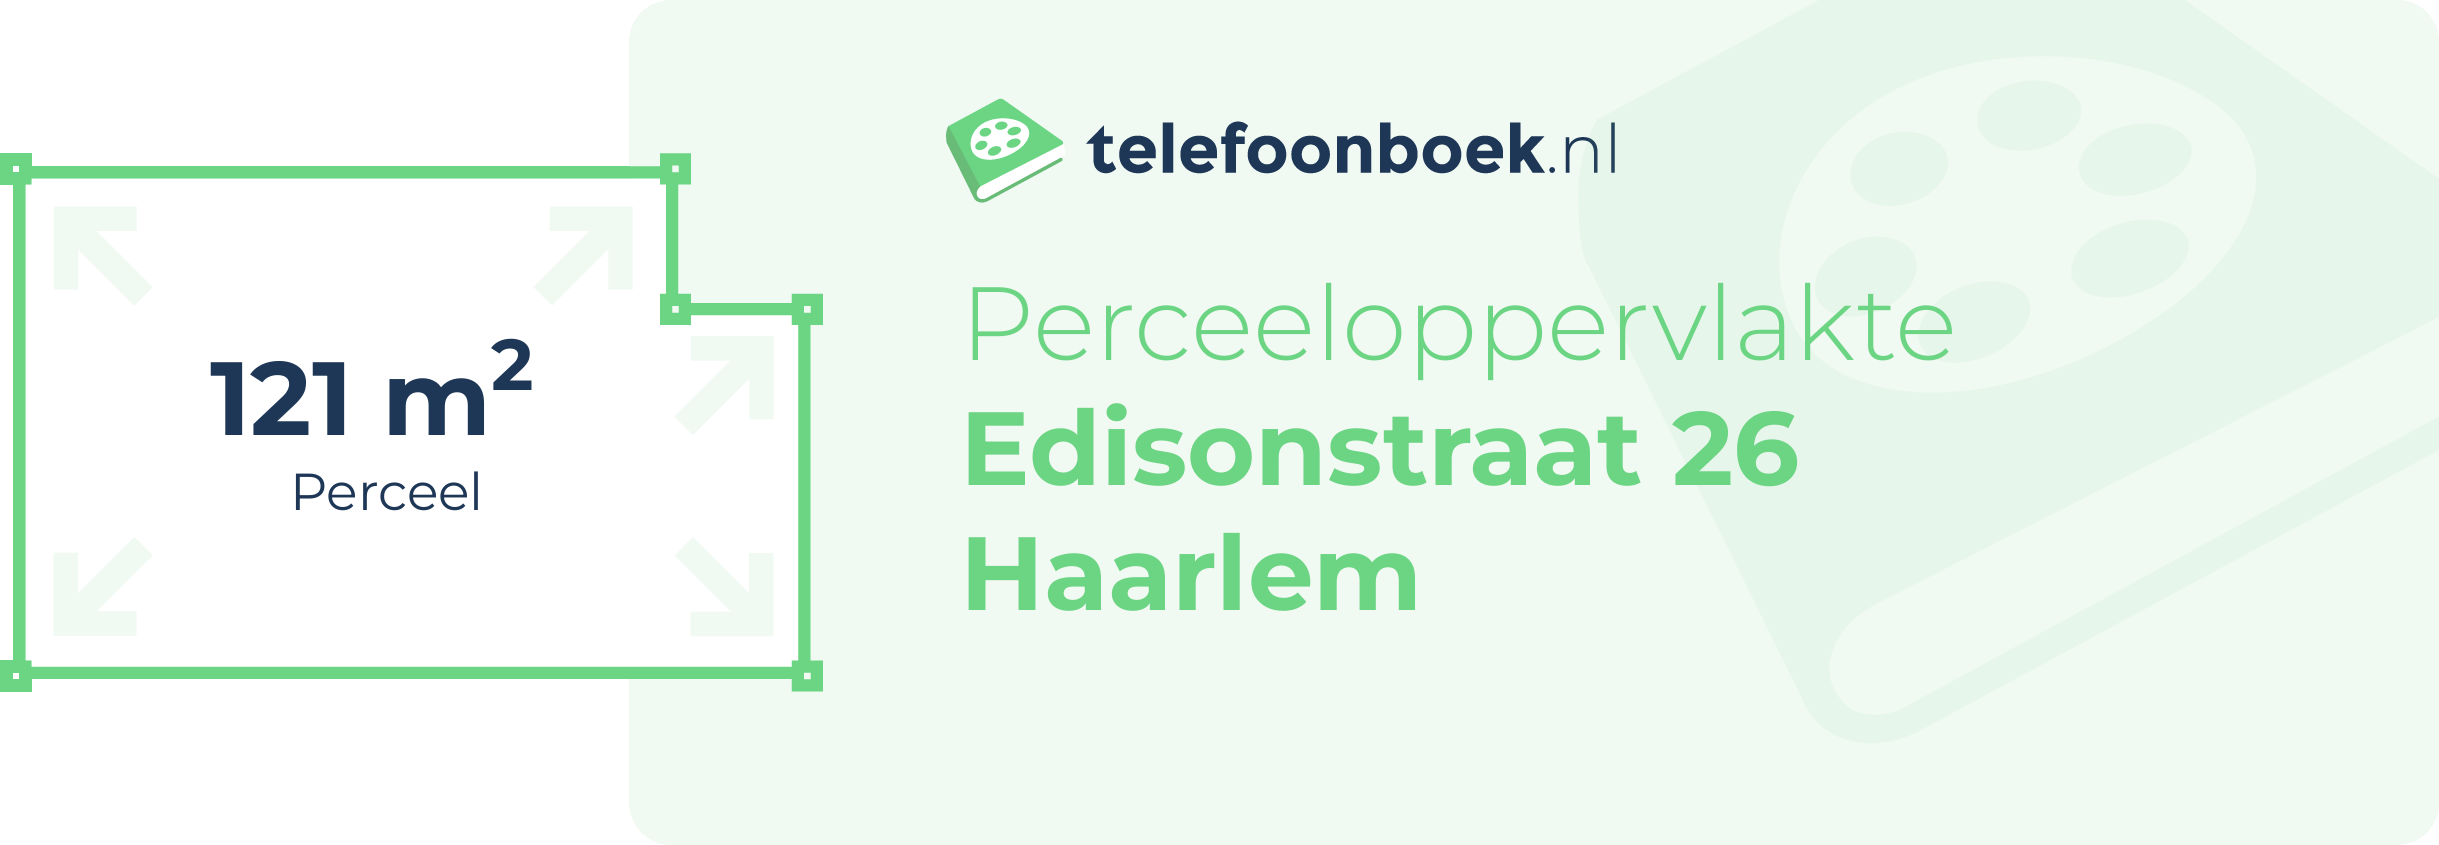 Perceeloppervlakte Edisonstraat 26 Haarlem